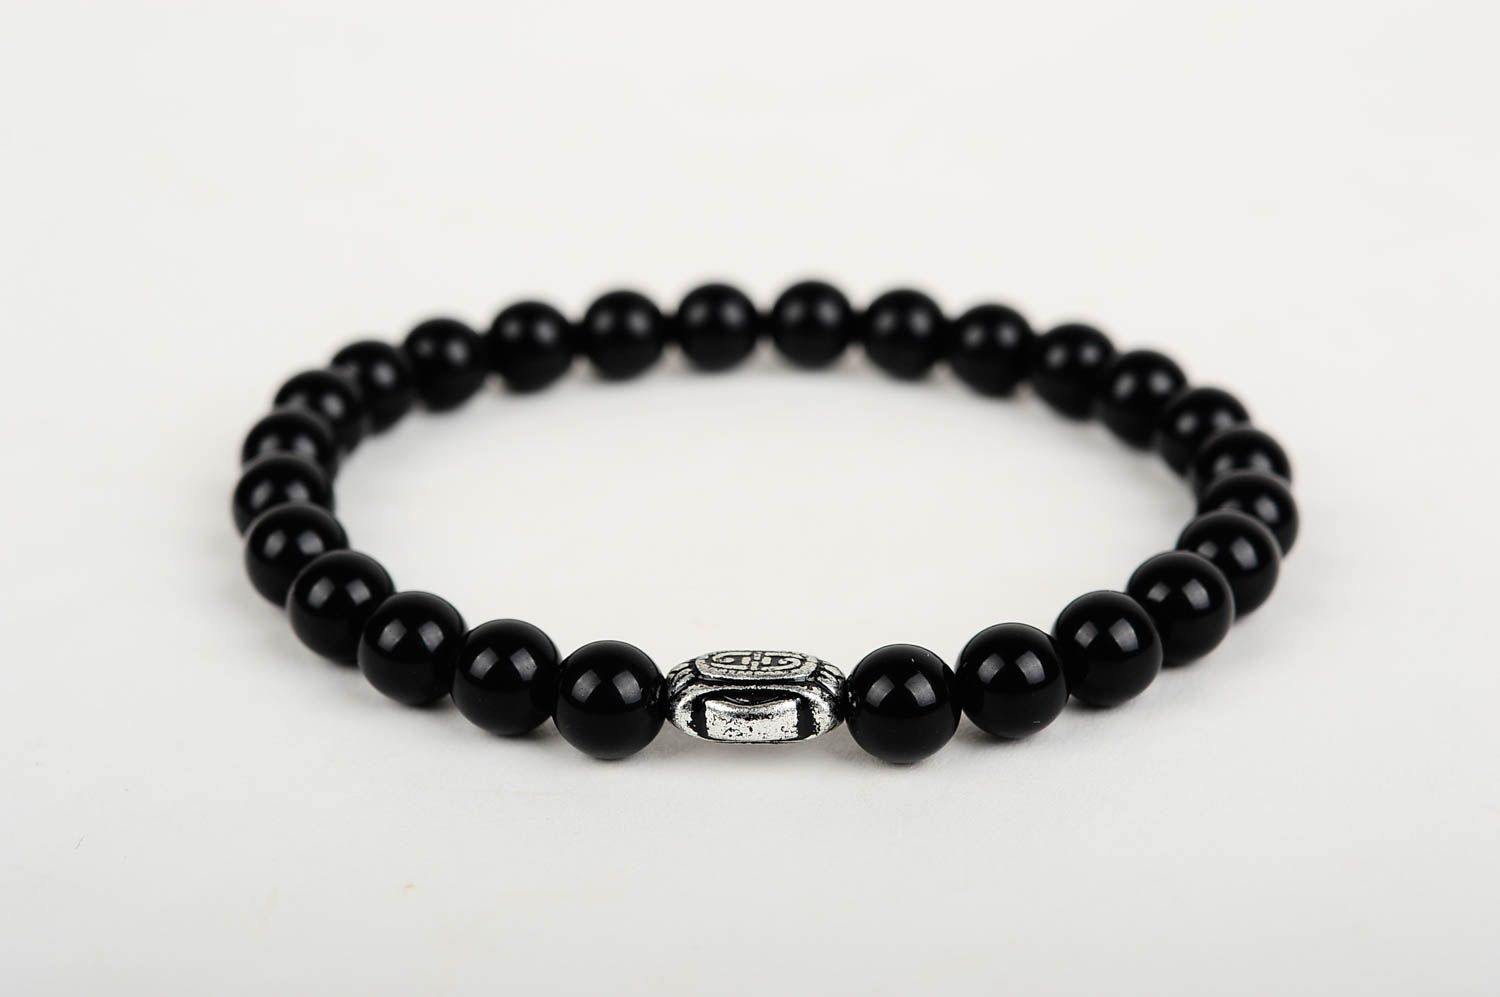 Handmade black beads stretchy bracelet with metal centerpiece charm for women photo 3